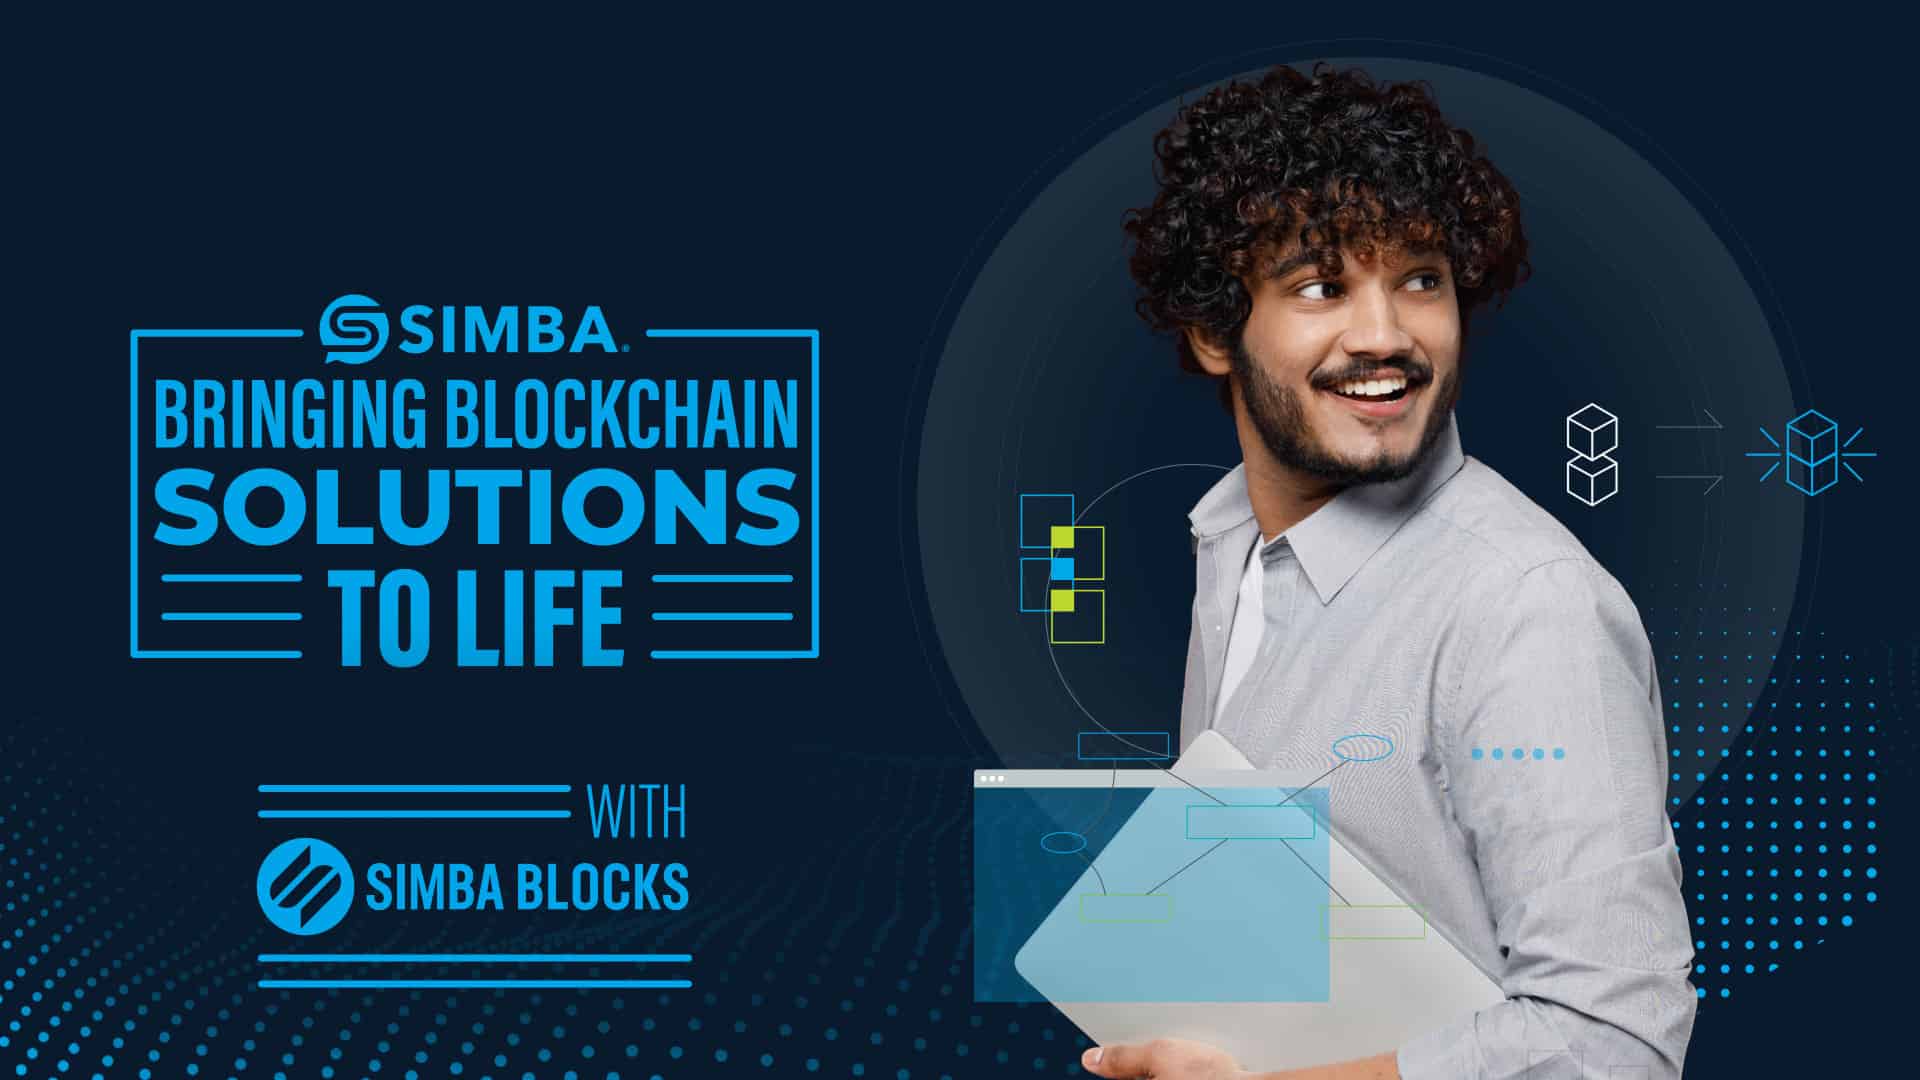 SIMBA Chain Makes Building on the Blockchain Easier With SIMBA Blocks